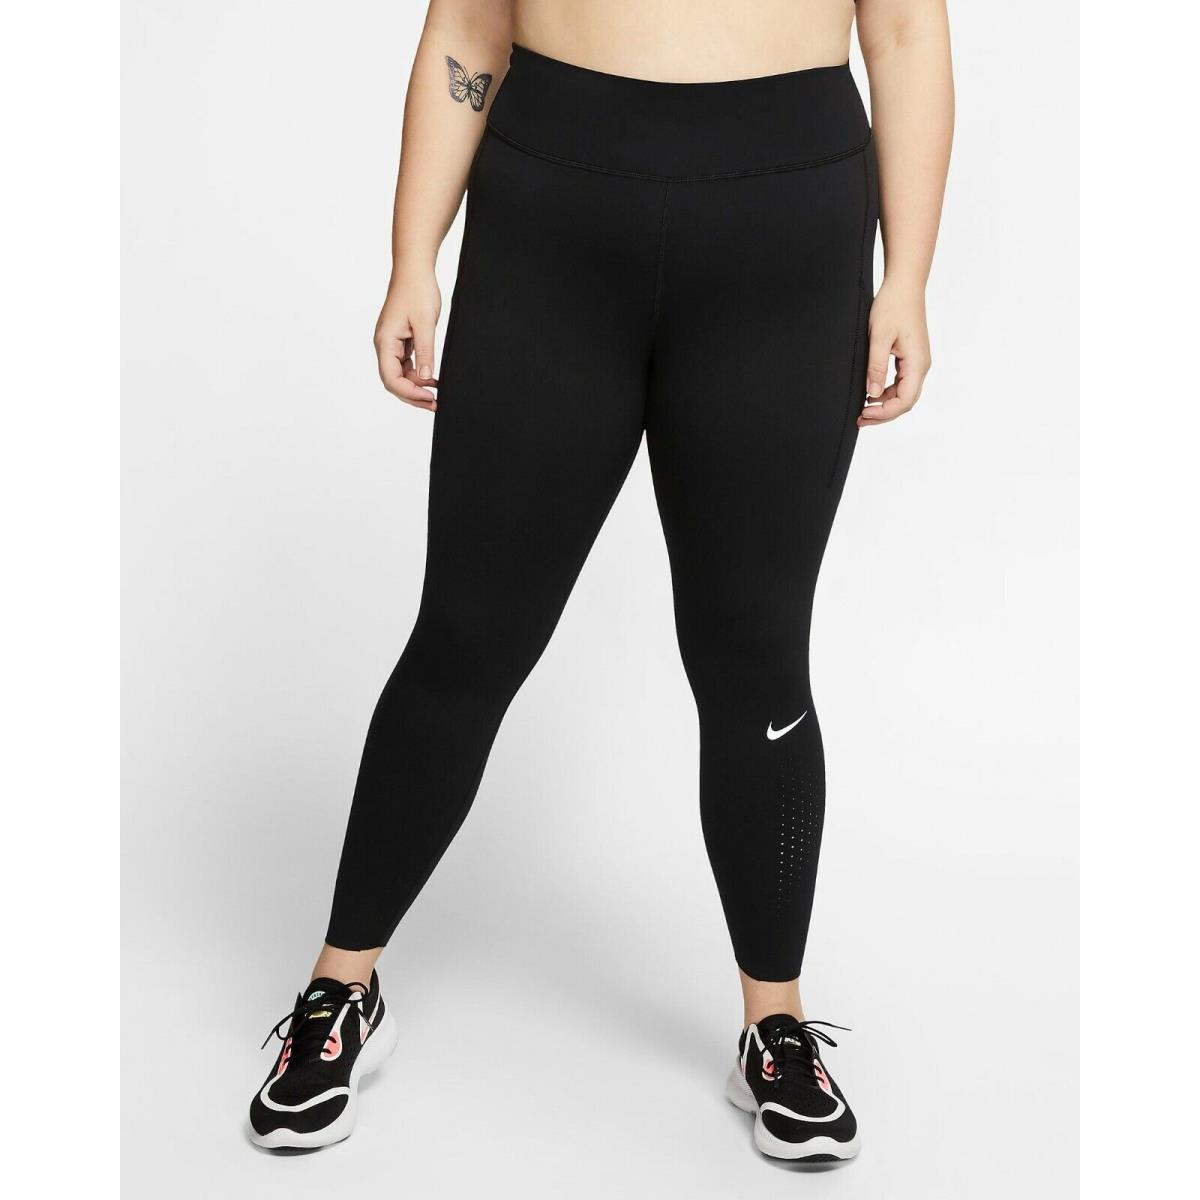 Nike Women`s Epic Luxe Leggings Athletic Pants Black Plus Size 3X 24W 26W